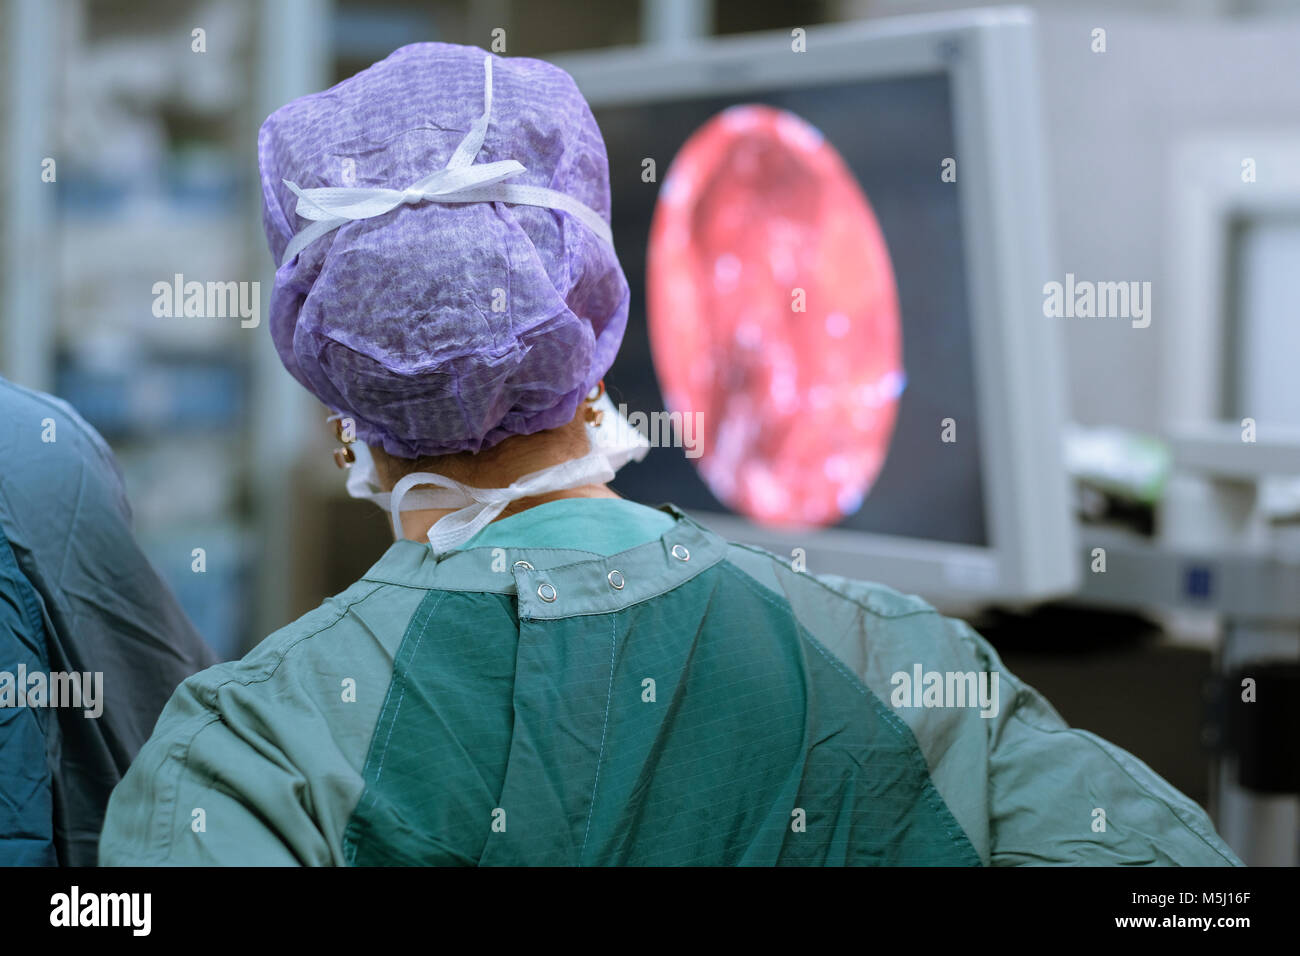 Neurosurgeon in scrubs looking at monitor Stock Photo